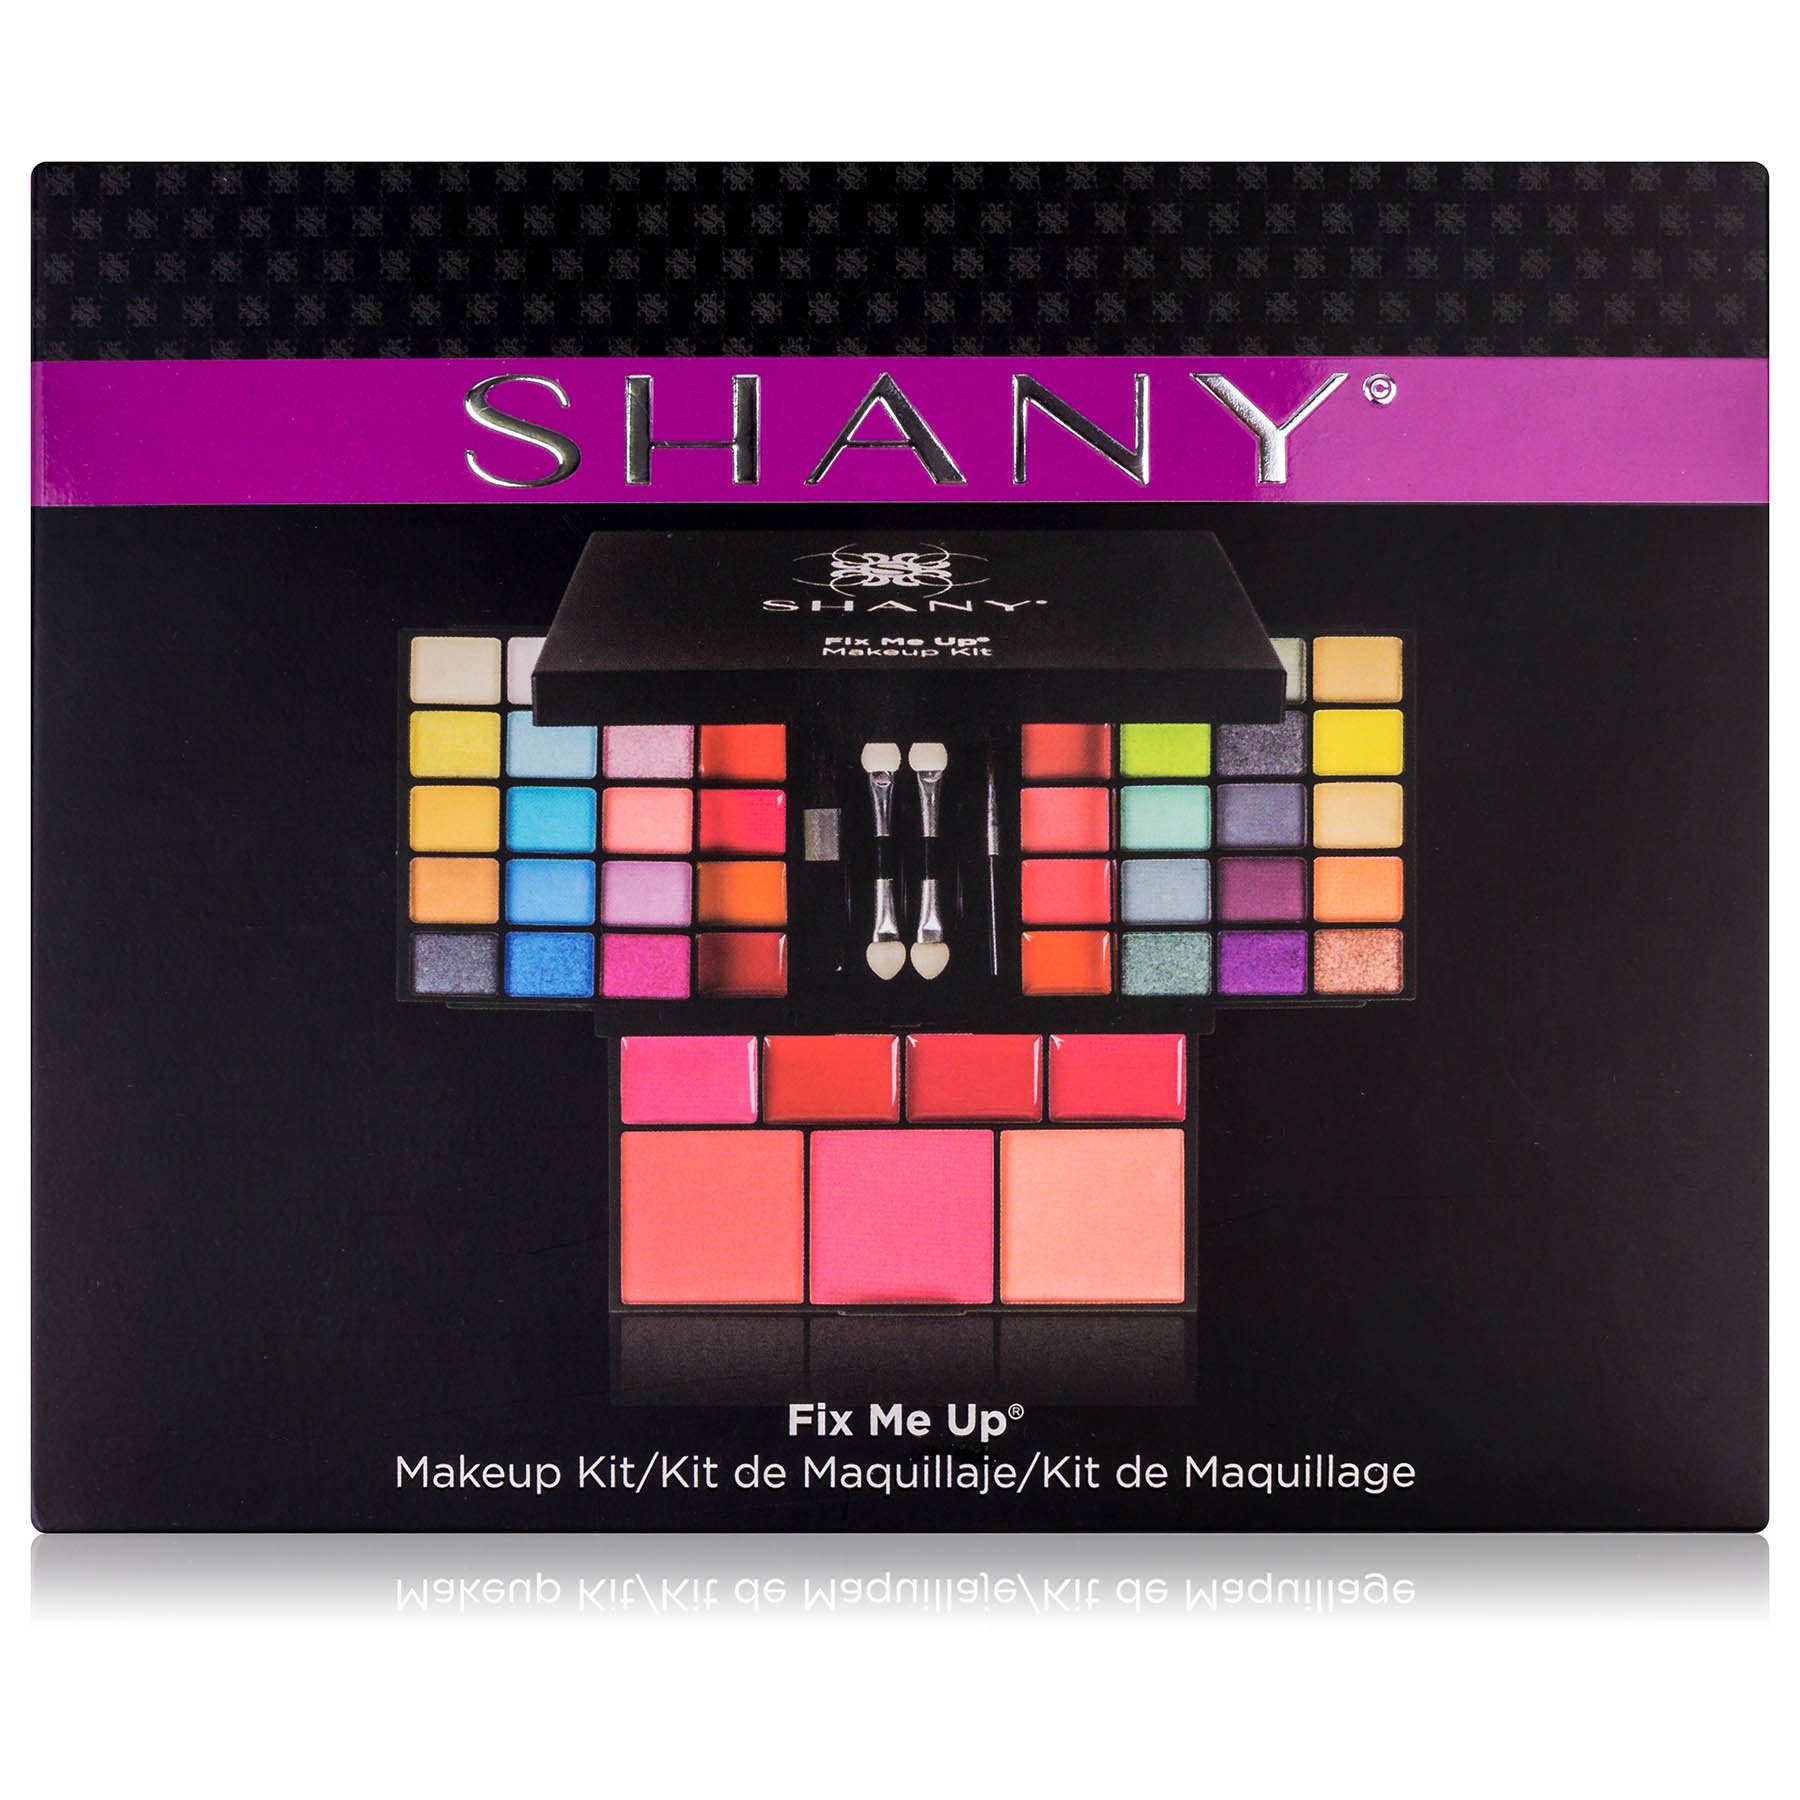 SHANY 'Fix Me Up' Makeup Kit - Eye Shadows, Lip Colors, Blushes, and Applicators